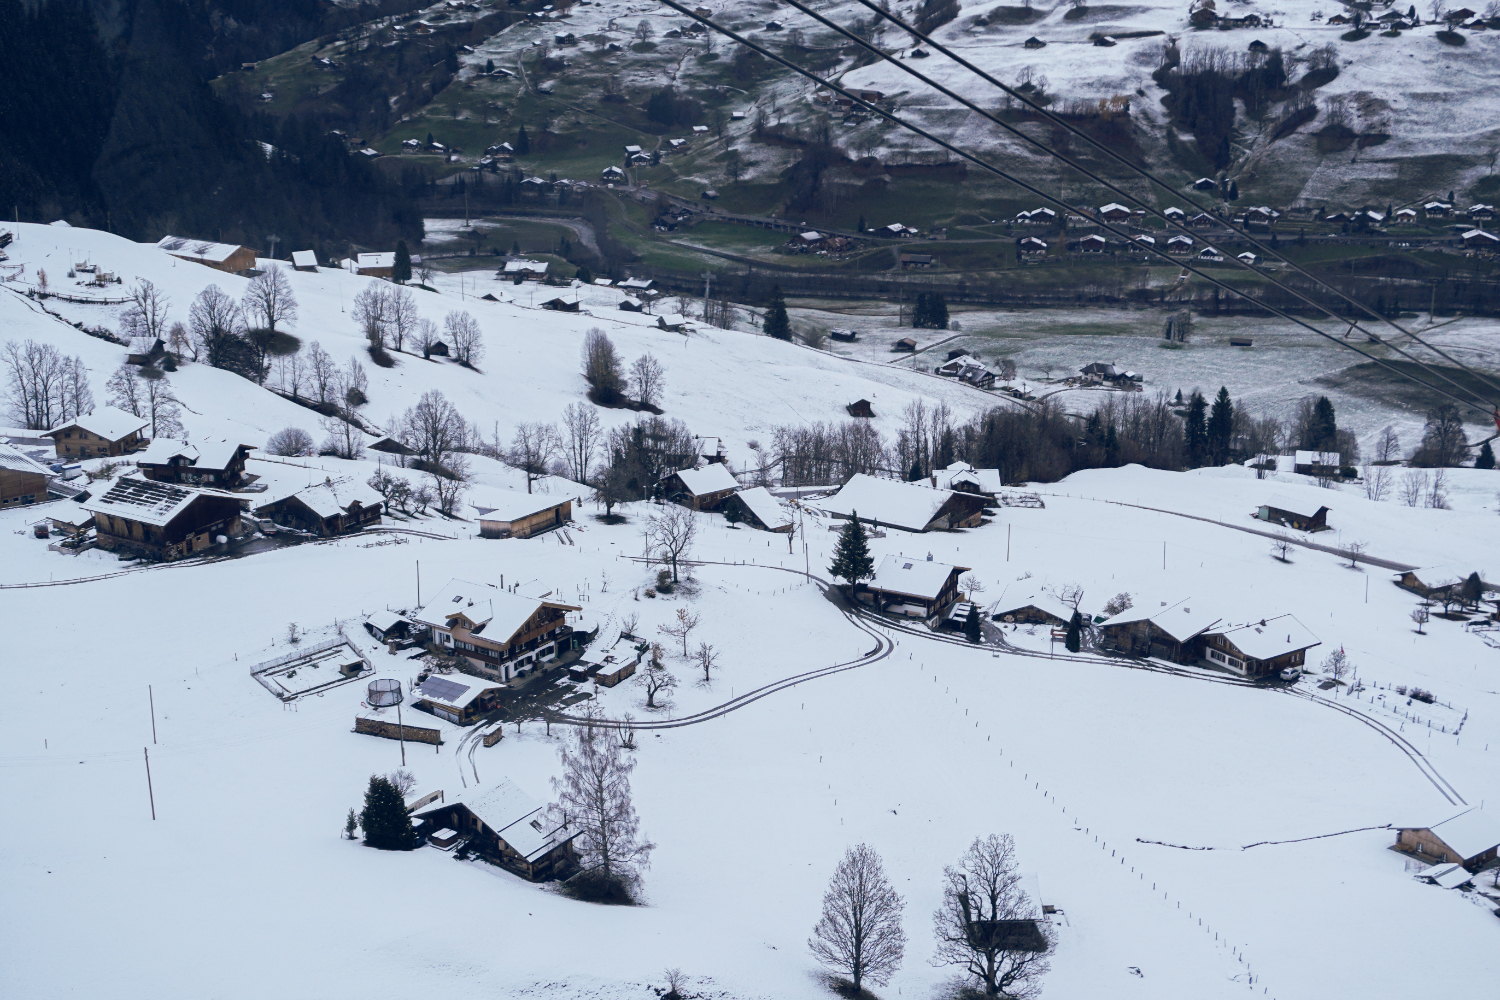 Grindelwald is a popular alpine destination